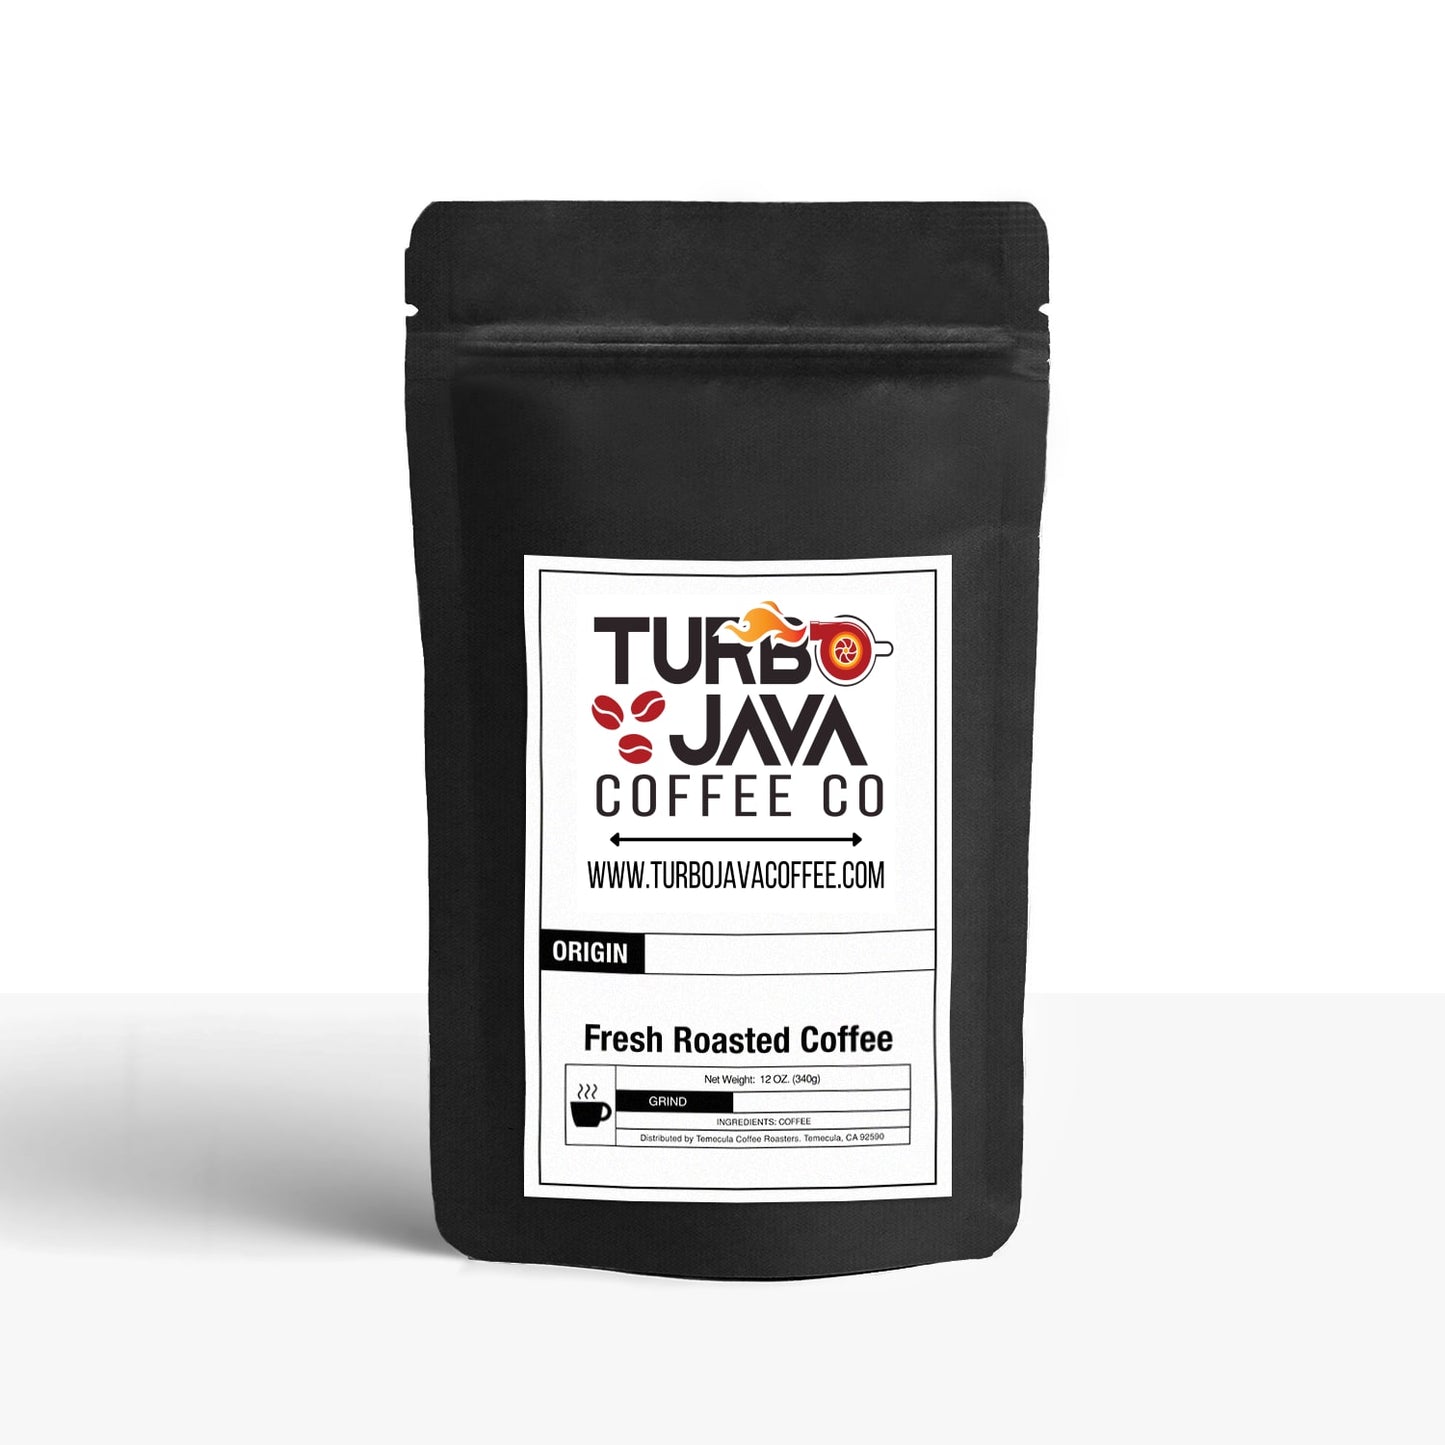 Turbo Java Coffee Co. Half Caff Blend Coffee 12 oz / Standard,12 oz / Espresso,12 oz / Whole Bean,1 lb / Standard,1 lb / Espresso,1 lb / Whole Bean,2 lb / Standard,2 lb / Espresso,2 lb / Whole Bean,5 lb / Standard,5 lb / Espresso,5 lb / Whole Bean